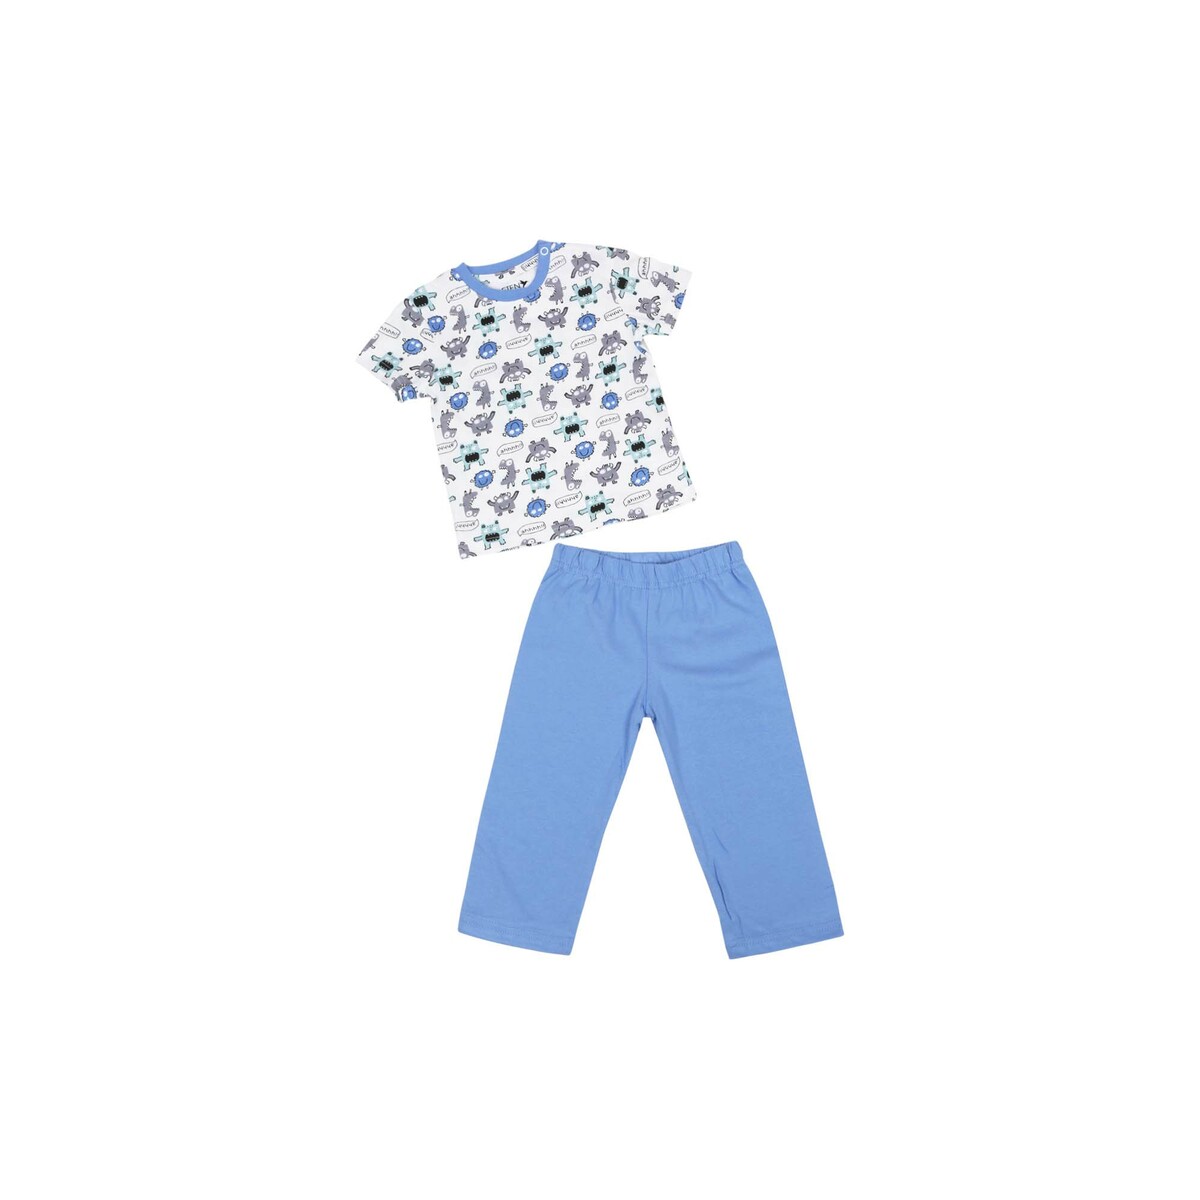 Eten Infants Boys Pyjama Set Short Sleeve White Blue SCCIBPSS08 6M